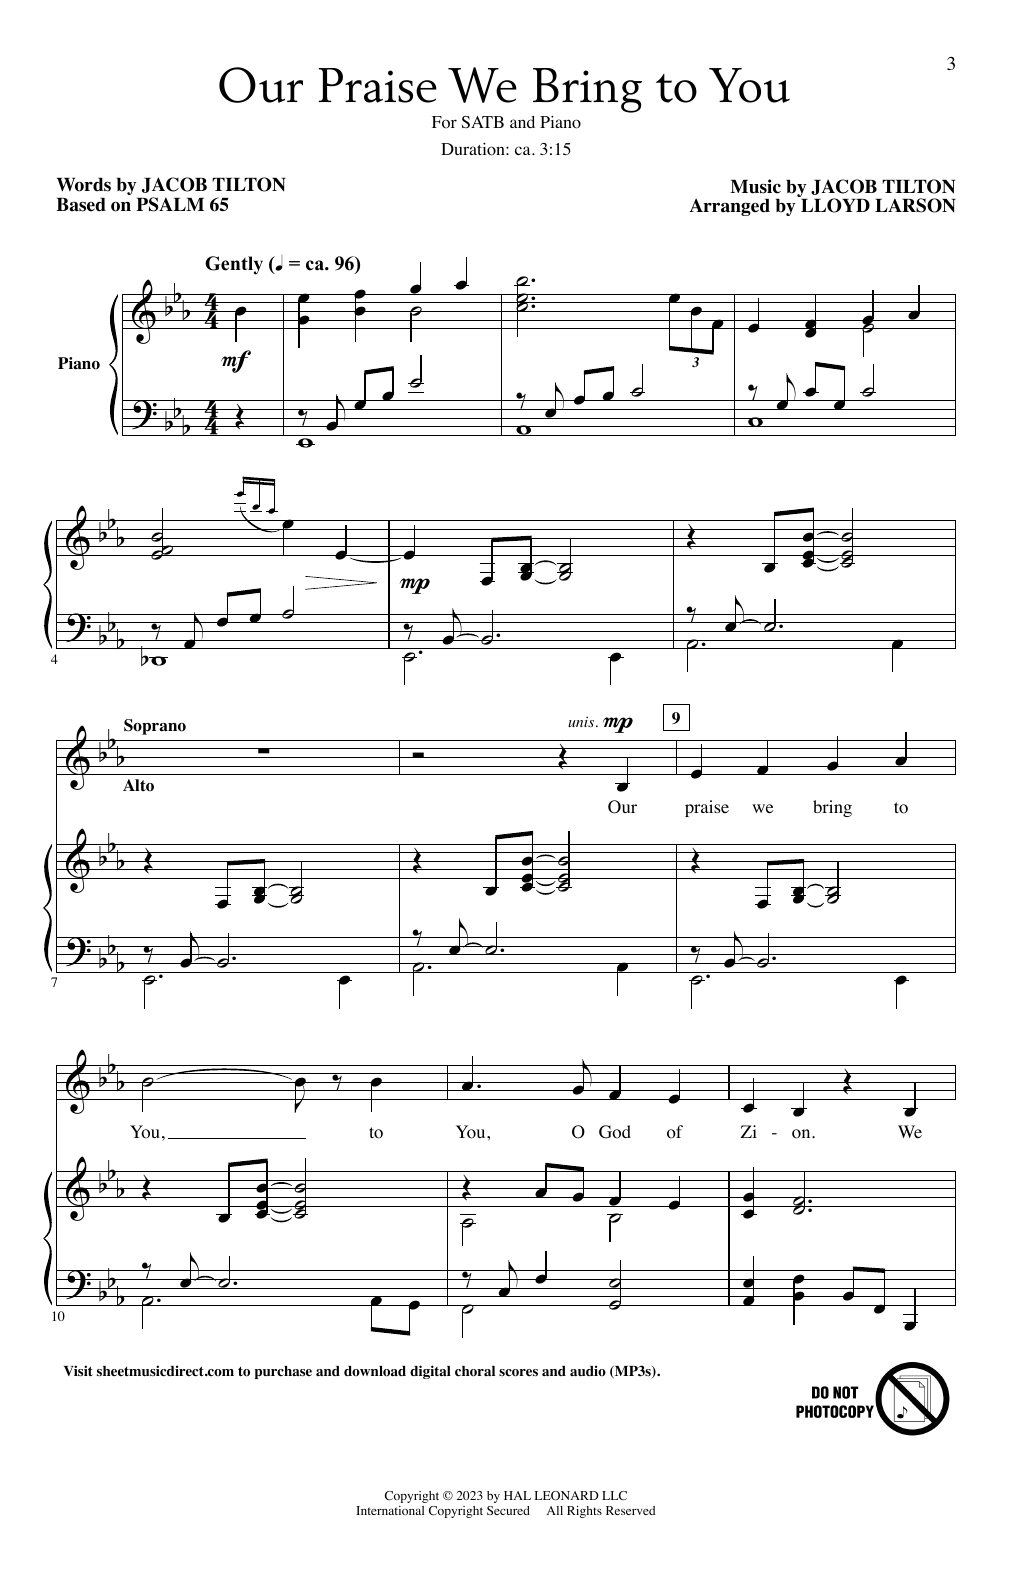 Jacob Tilton Our Praise We Bring To You (arr. Lloyd Larson) Sheet Music Notes & Chords for SATB Choir - Download or Print PDF